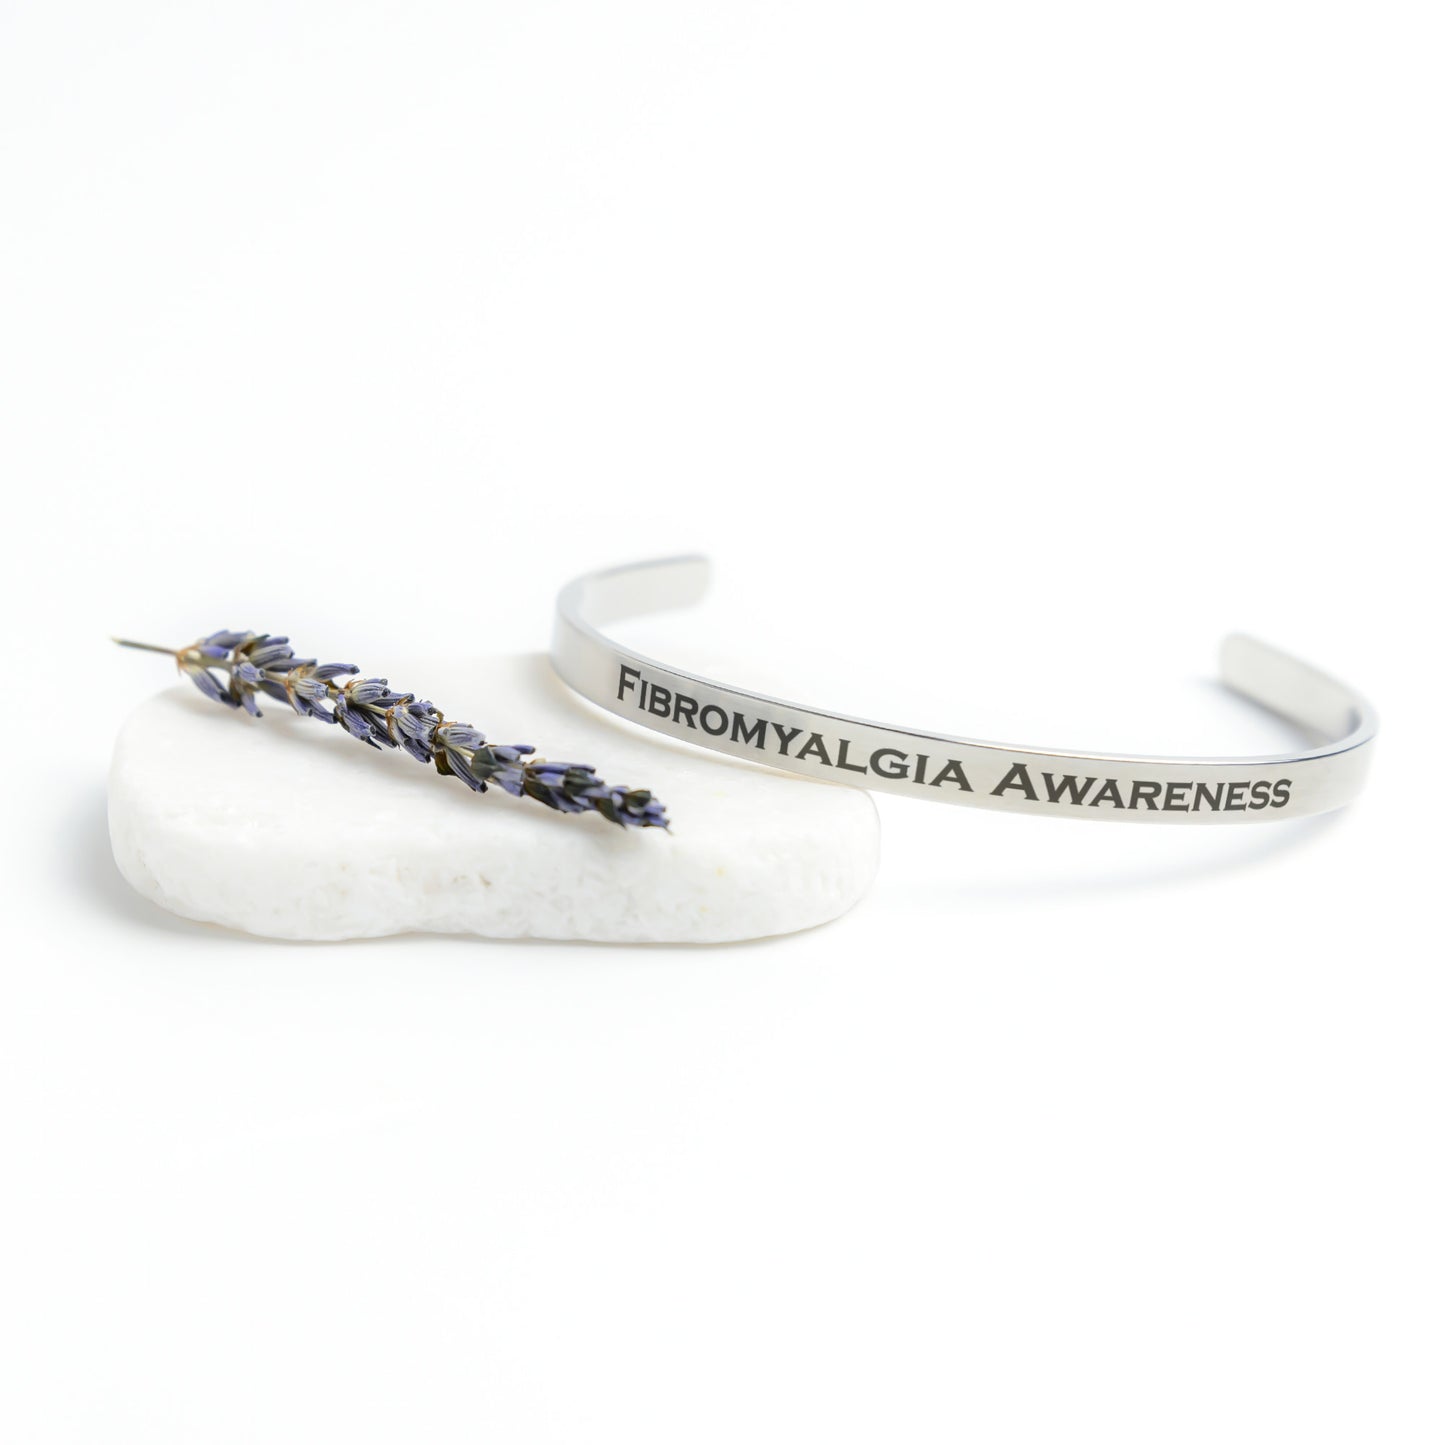 Personalized Fibromyalgia Awareness Cuff Bracelet